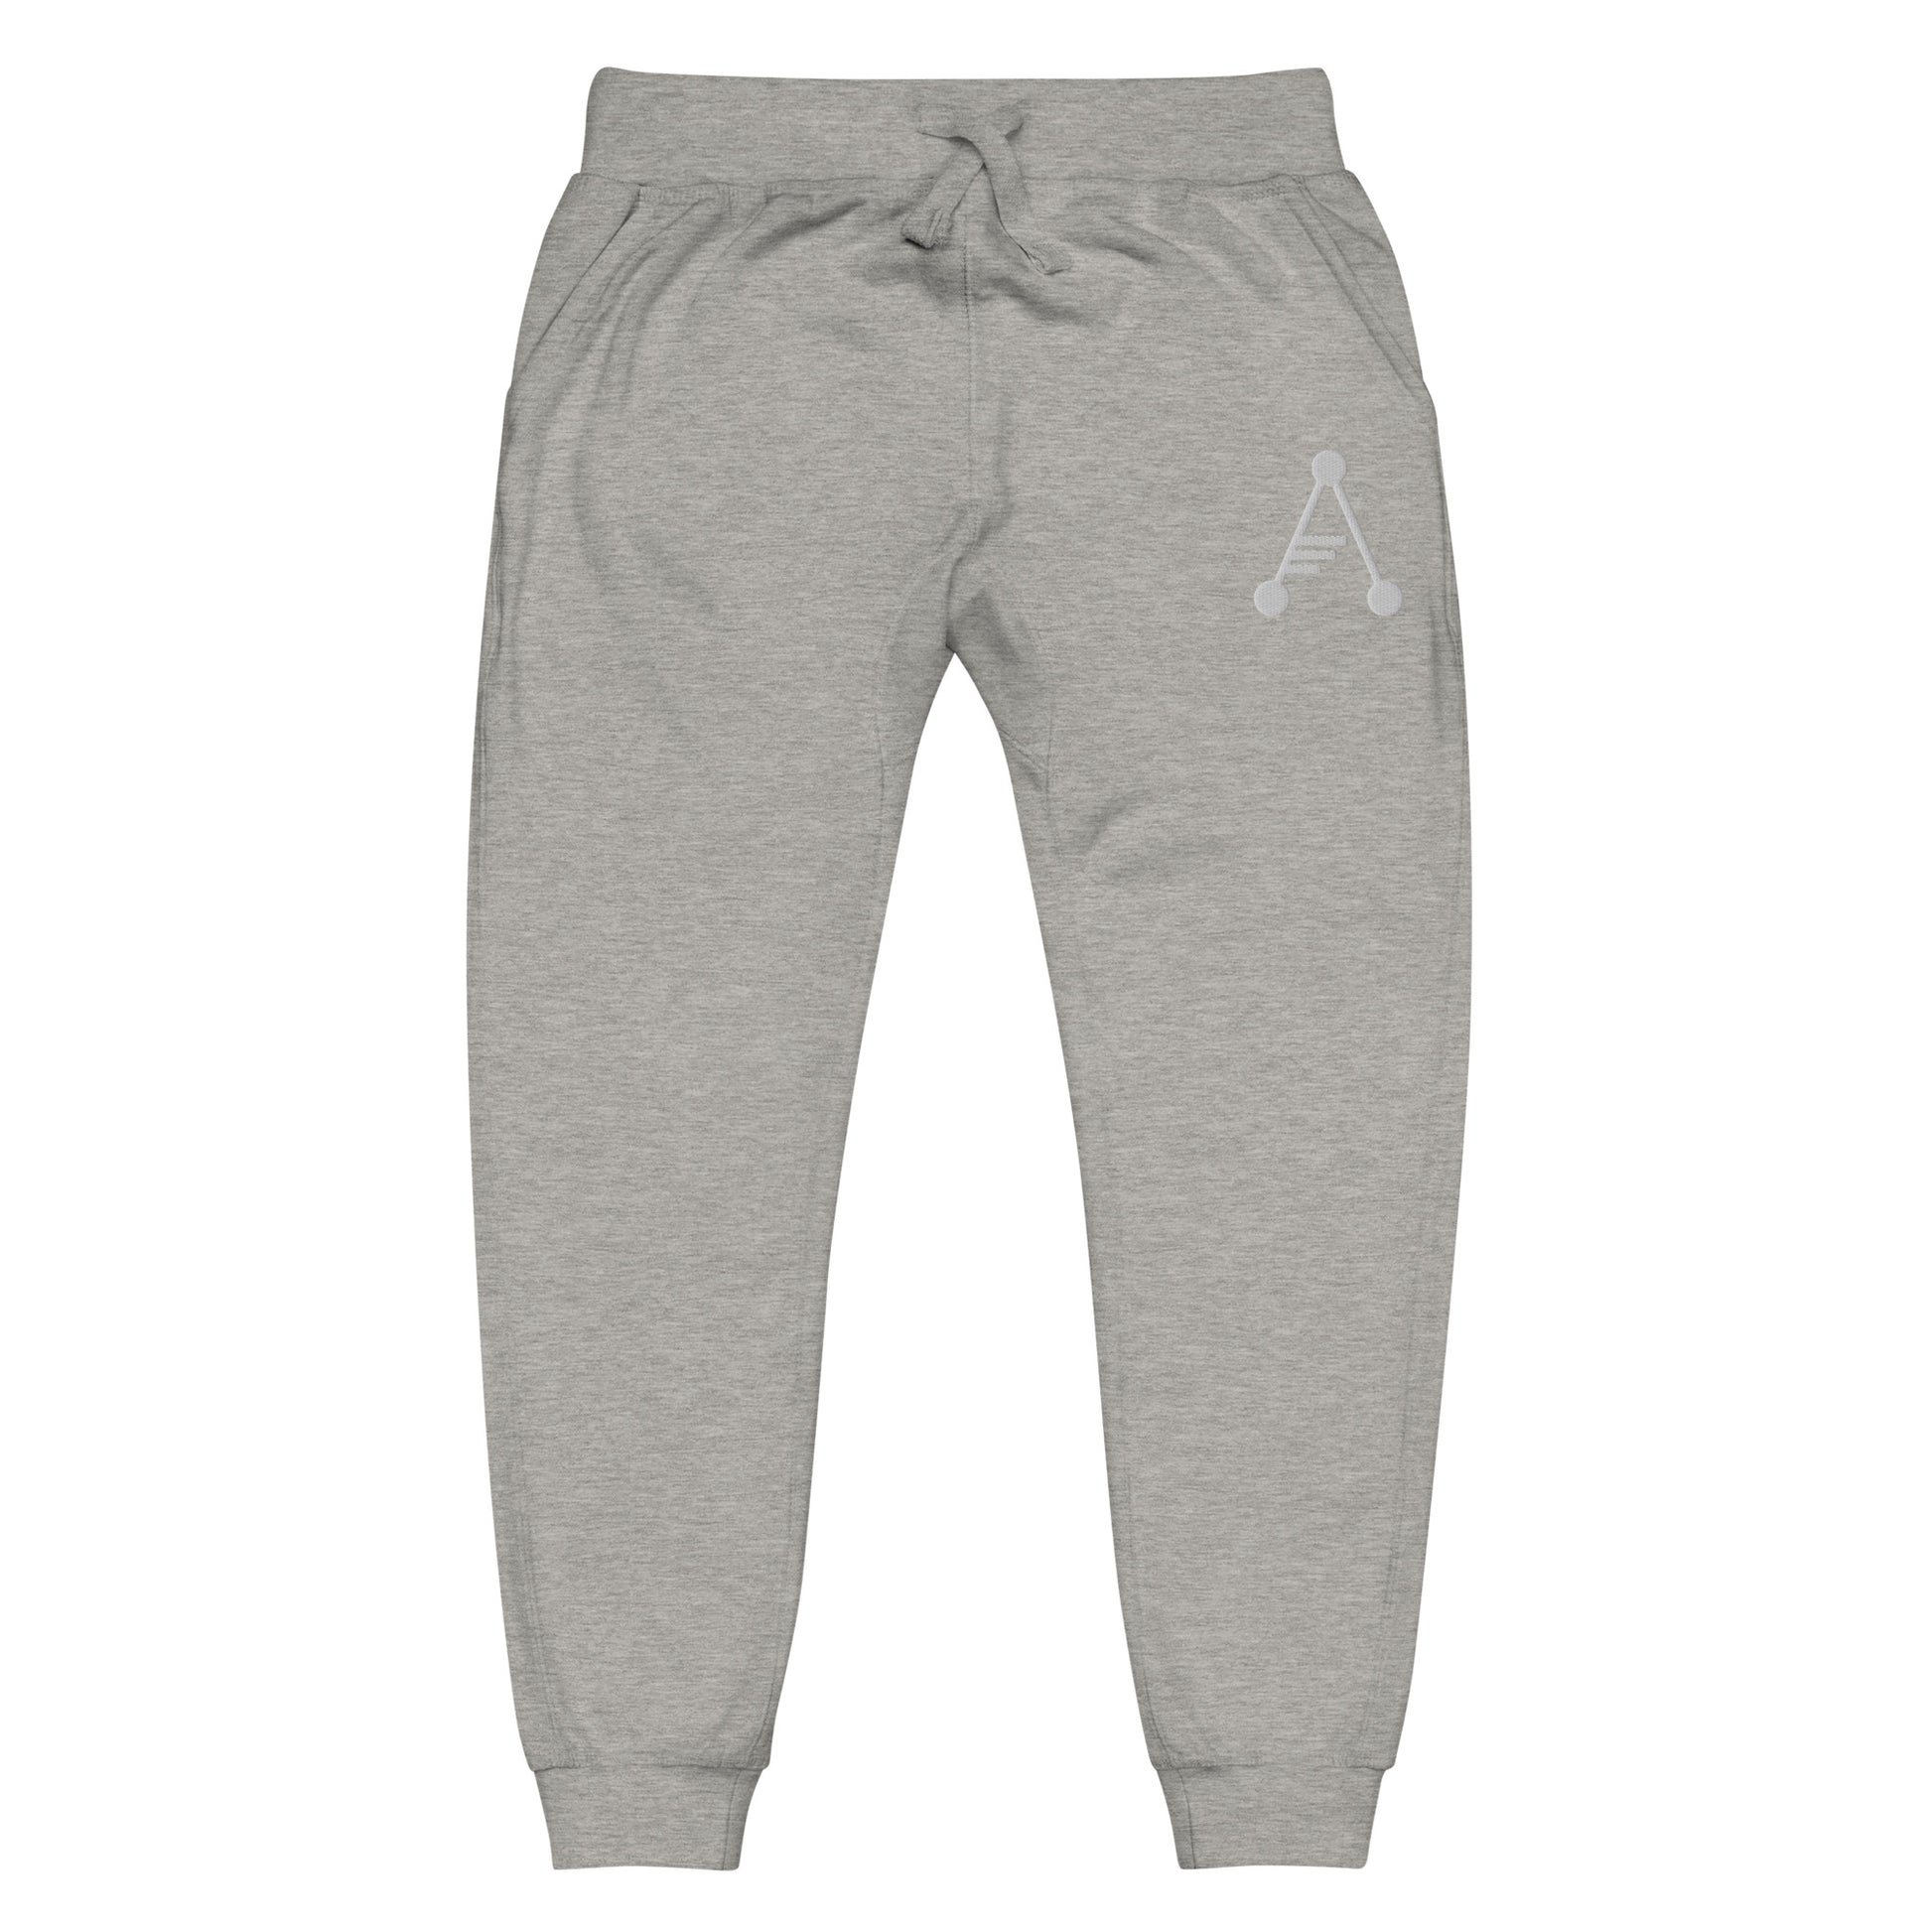 ABLE's Sweatpants – able.ua